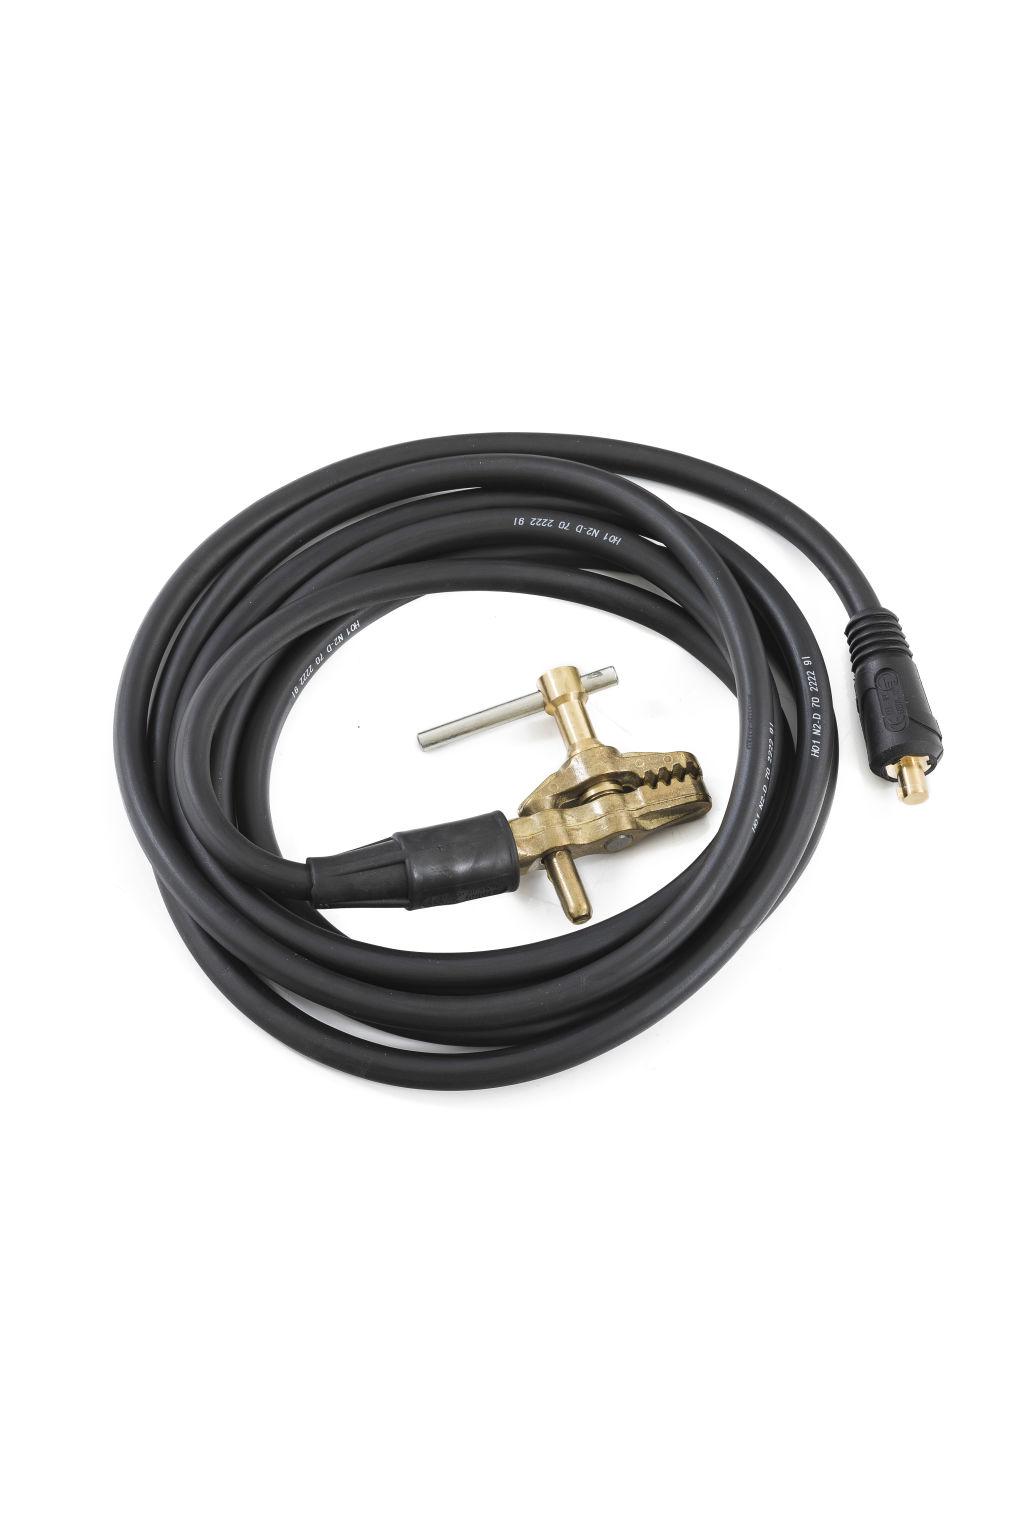 Earth return cable 70 Snap connector for drum or spool holder (female) Złącze żeńskie do